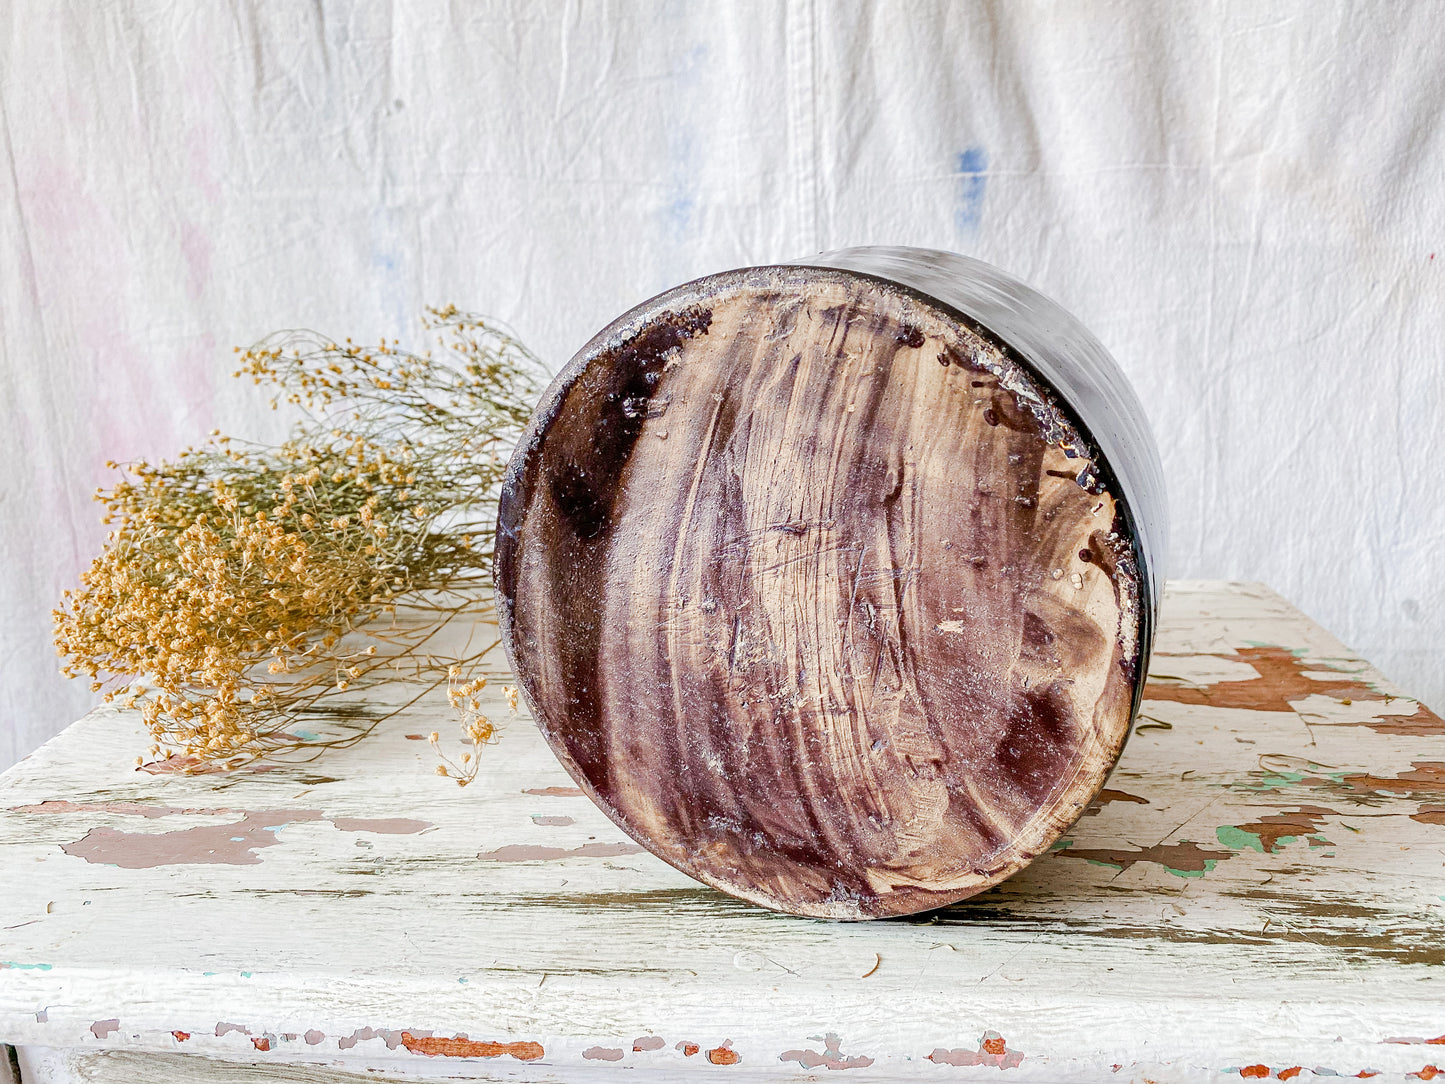 Antique Primitive Dark Brown Glazed 8" Canning Crock | Rustic Farmhouse Kitchen | Antique Stoneware Jar